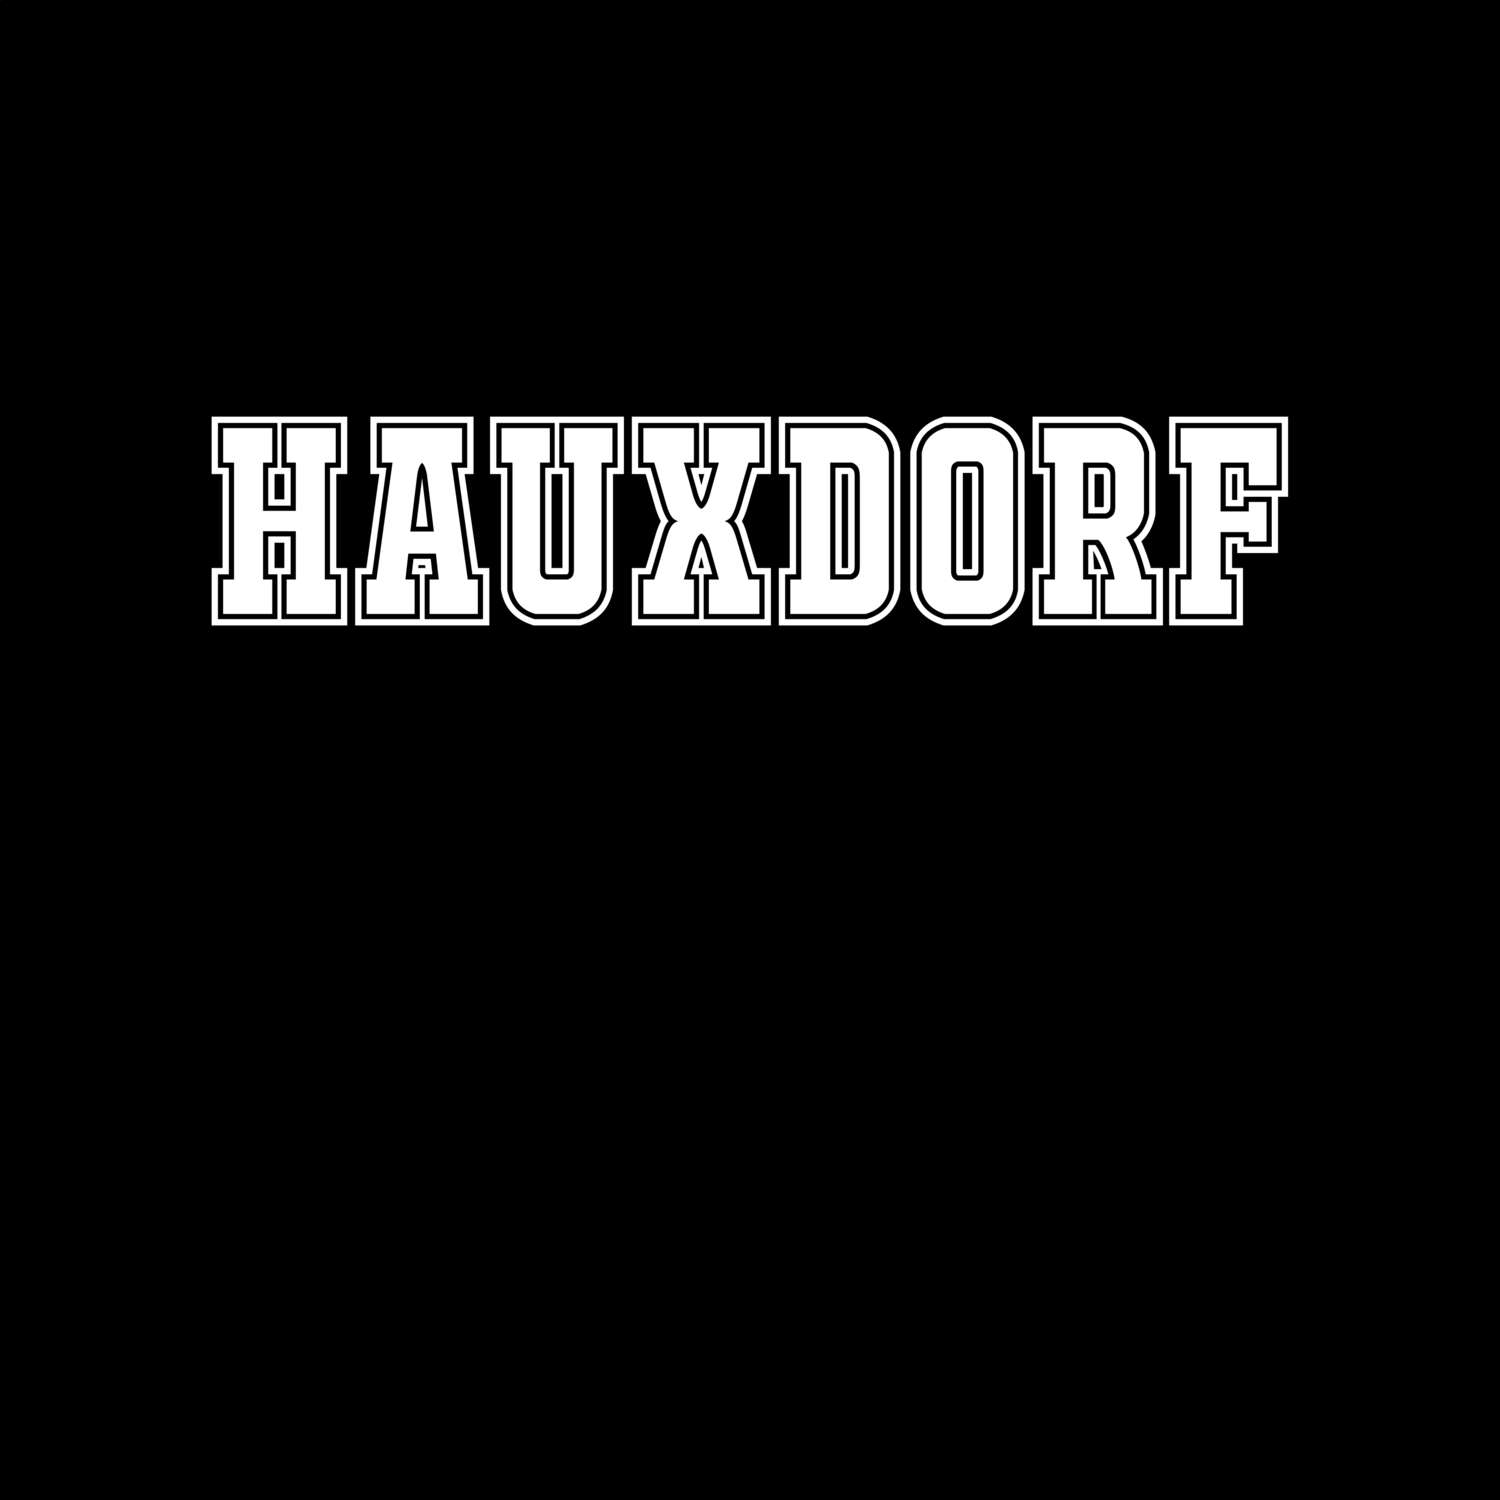 Hauxdorf T-Shirt »Classic«